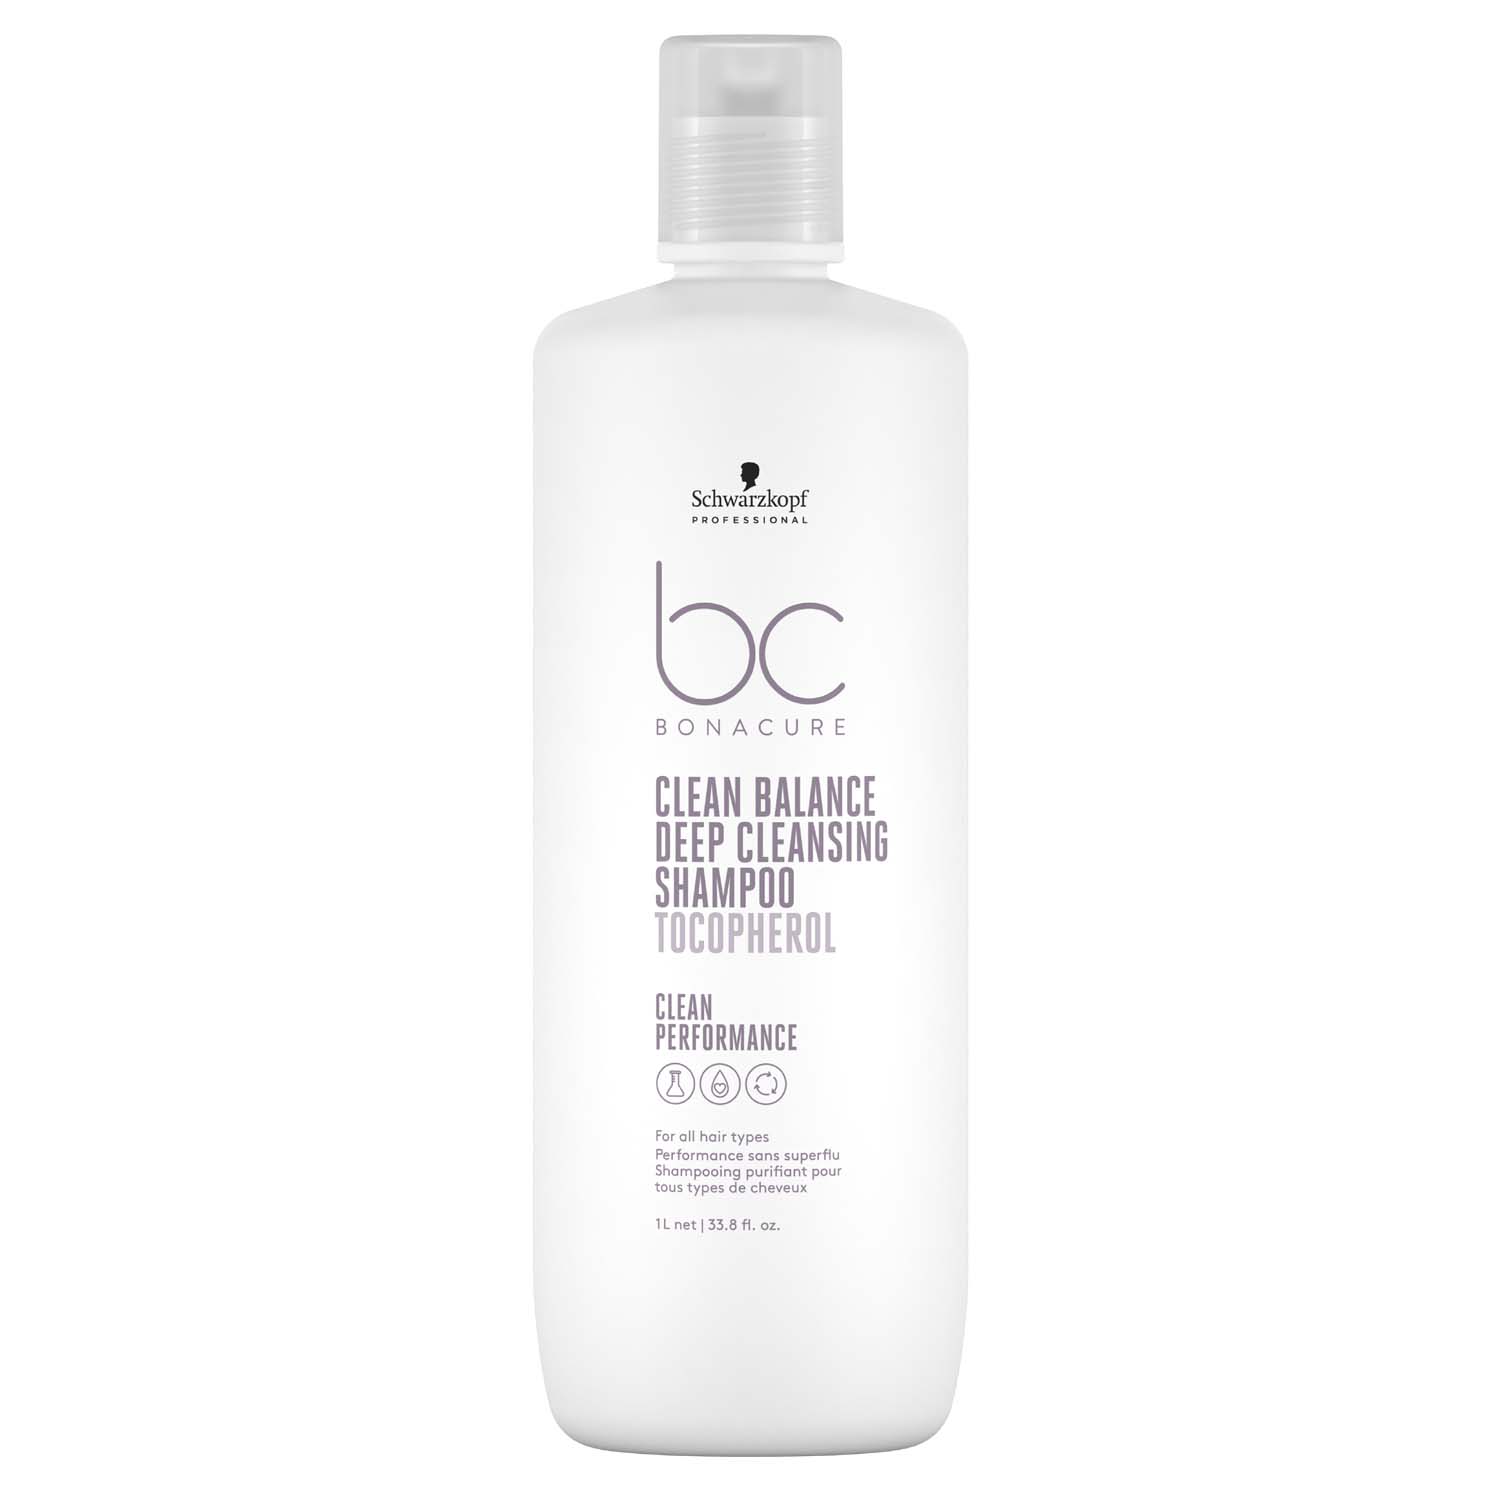 Bona Cure Clean Balance Deep Cleansing Shampoo